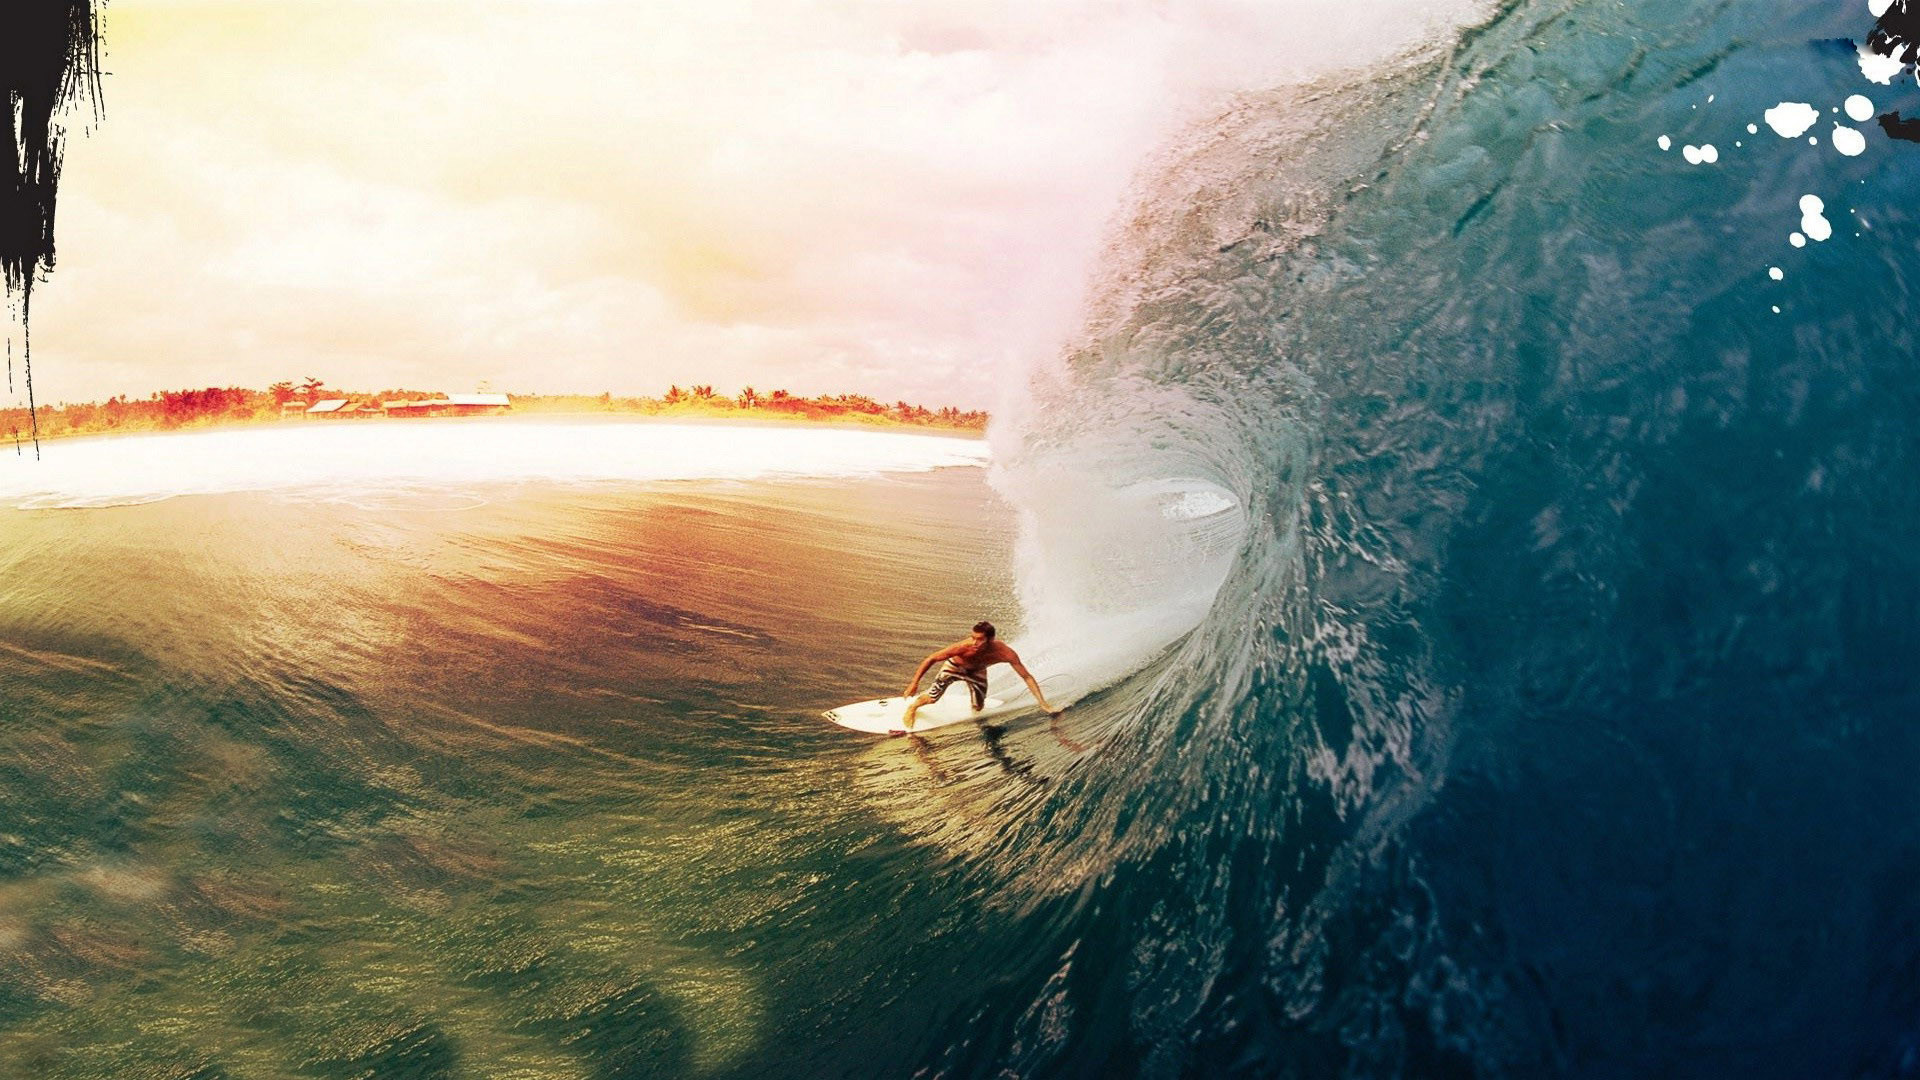 Surfing desktop backgrounds pictures